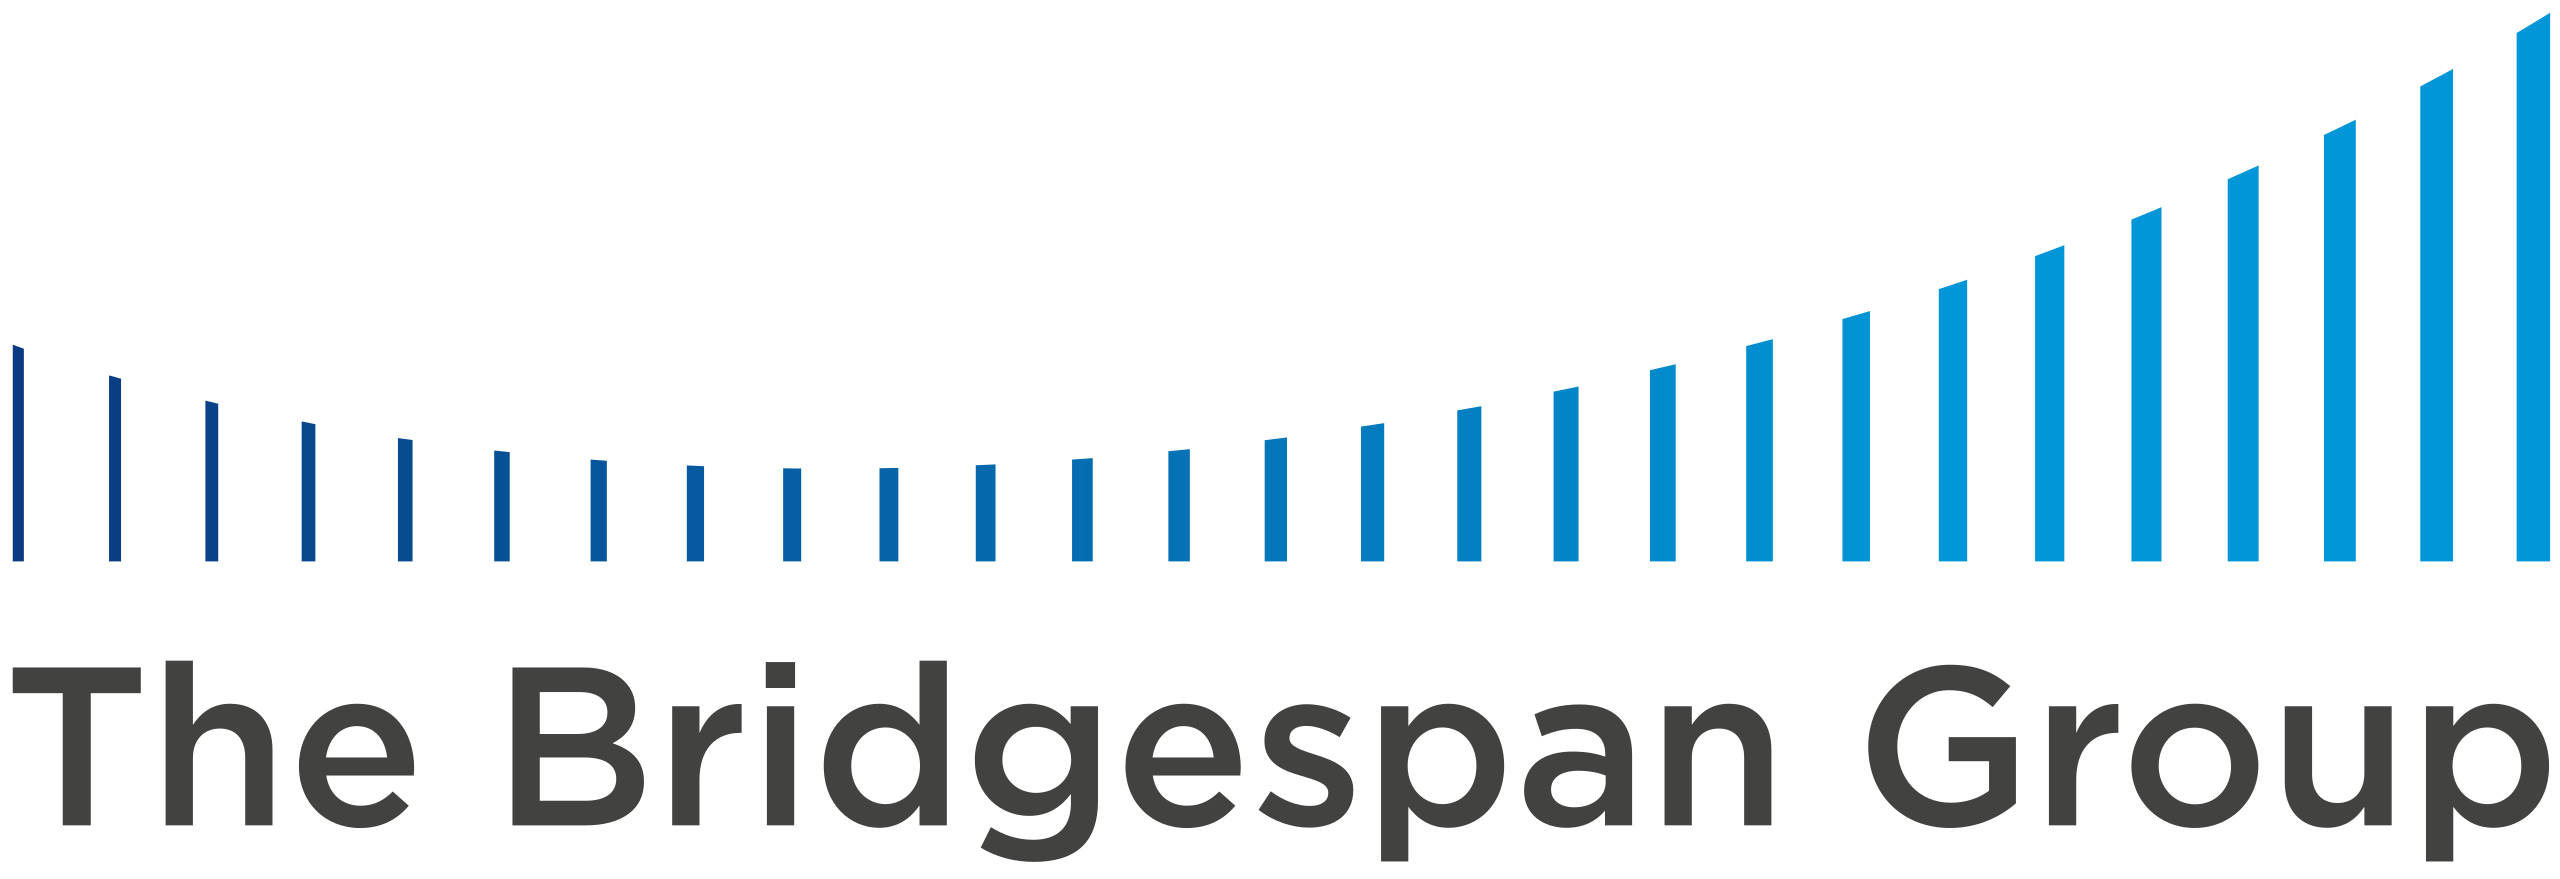 The_Bridgespan_Group_logo.svg (1)